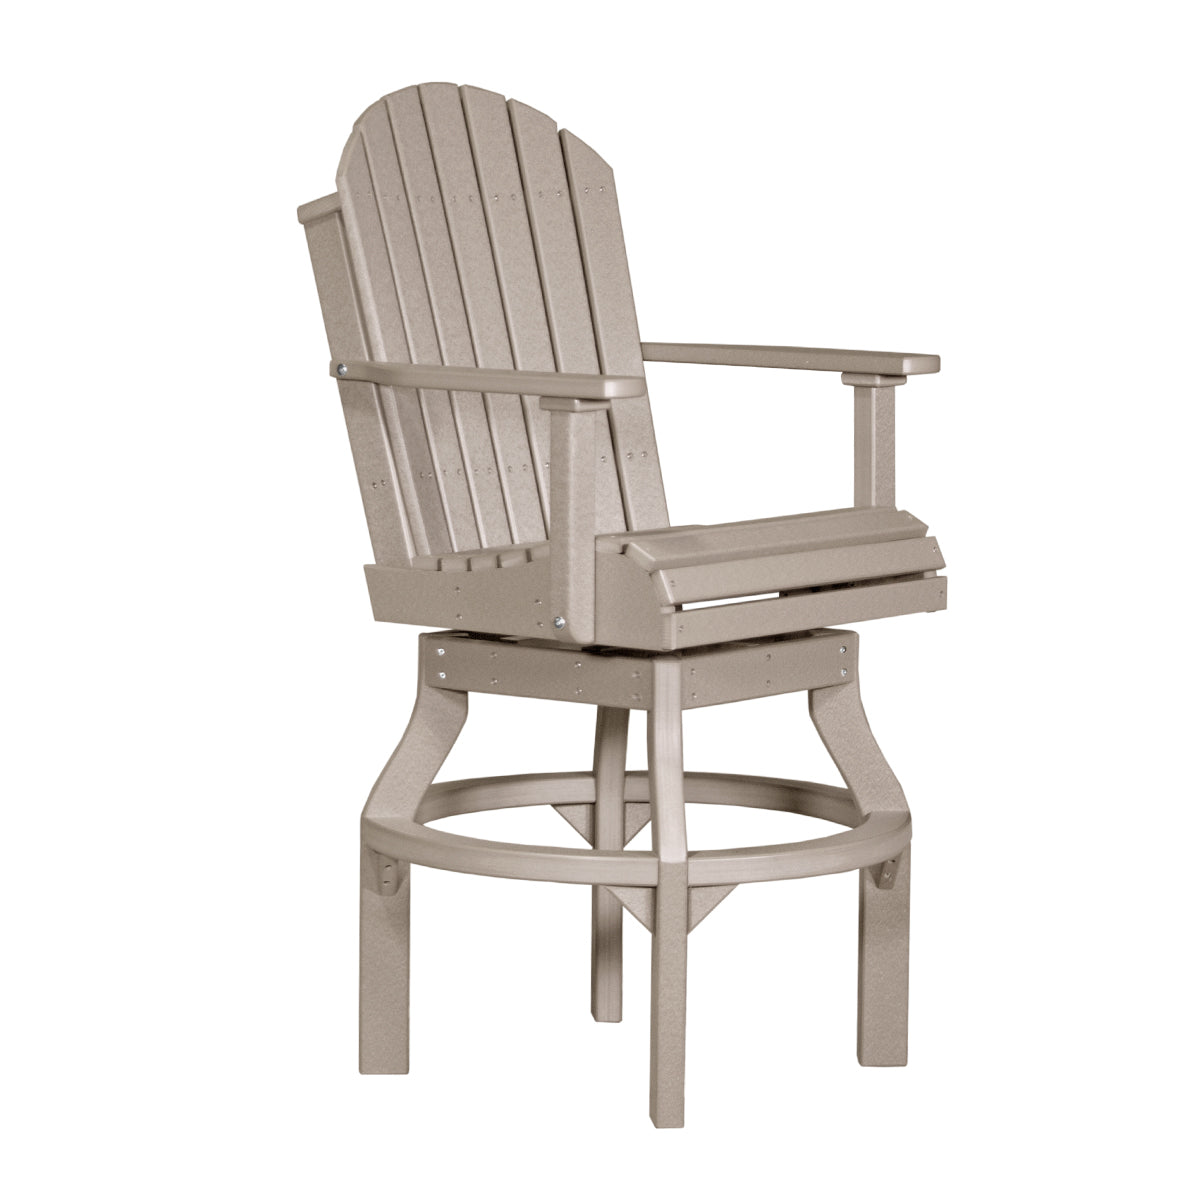 Luxcraft Adirondack Swivel Chair PASC